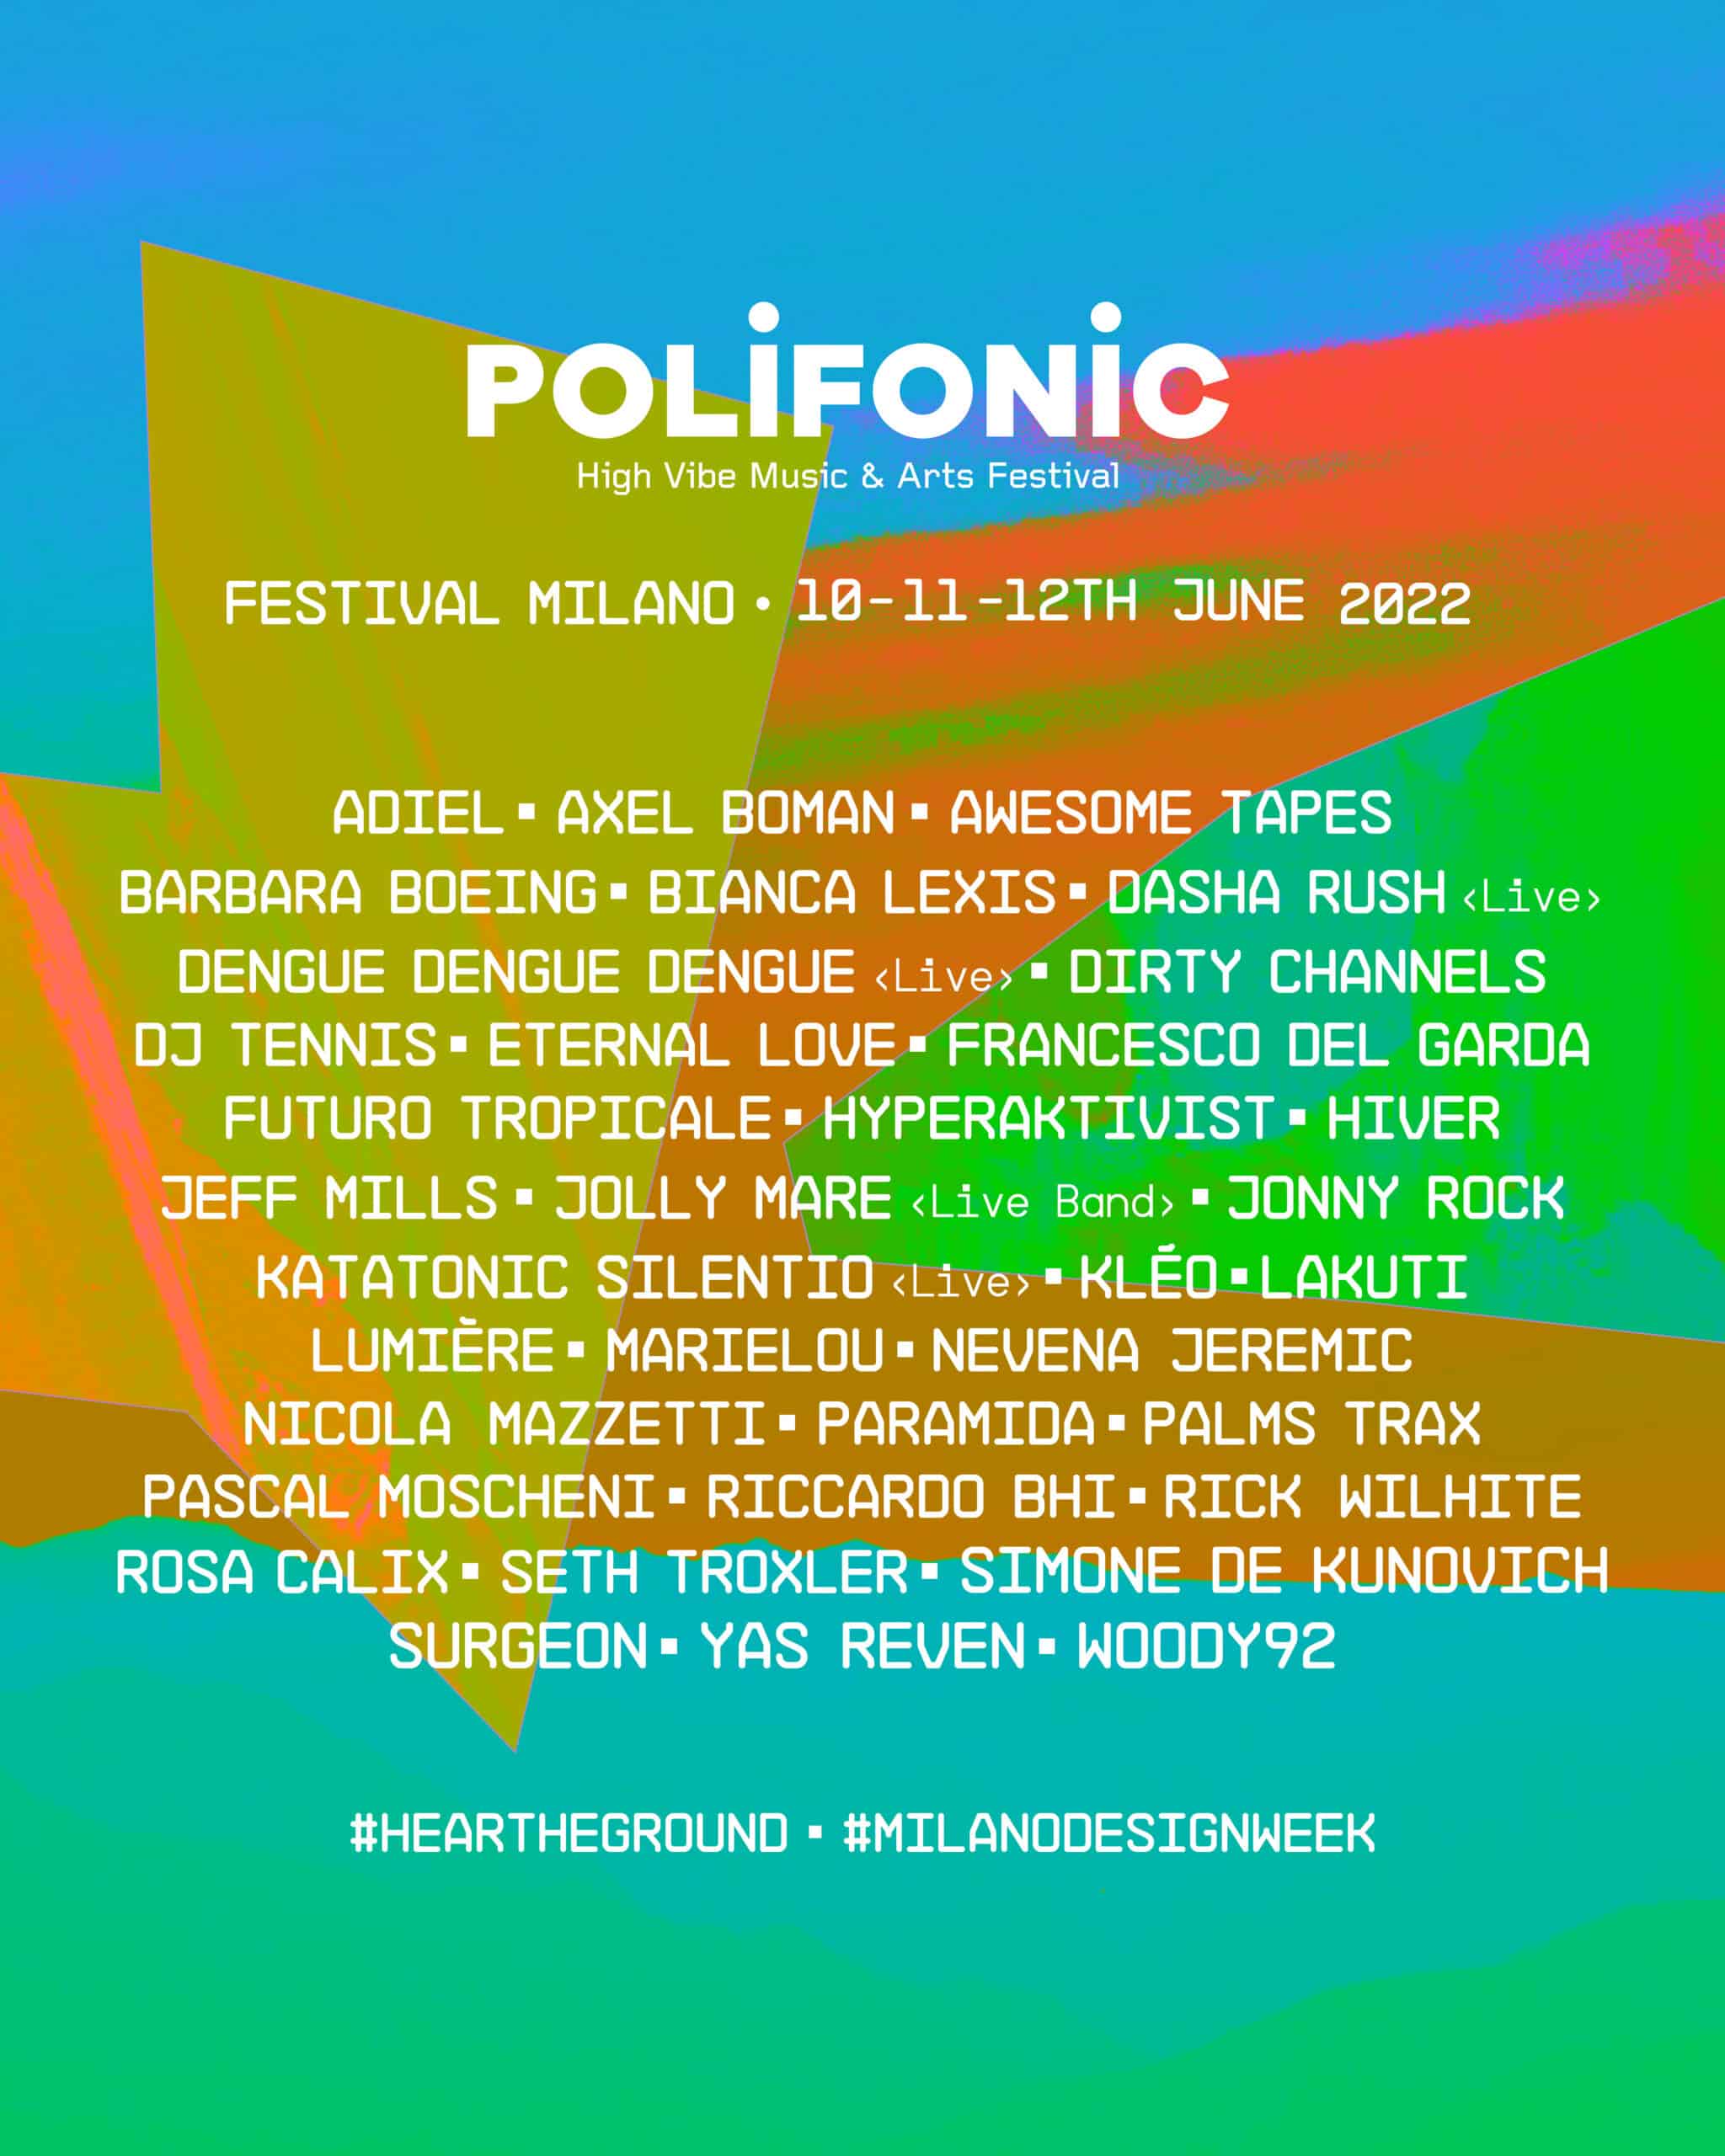 Polifonic Festival Milano - Lineup